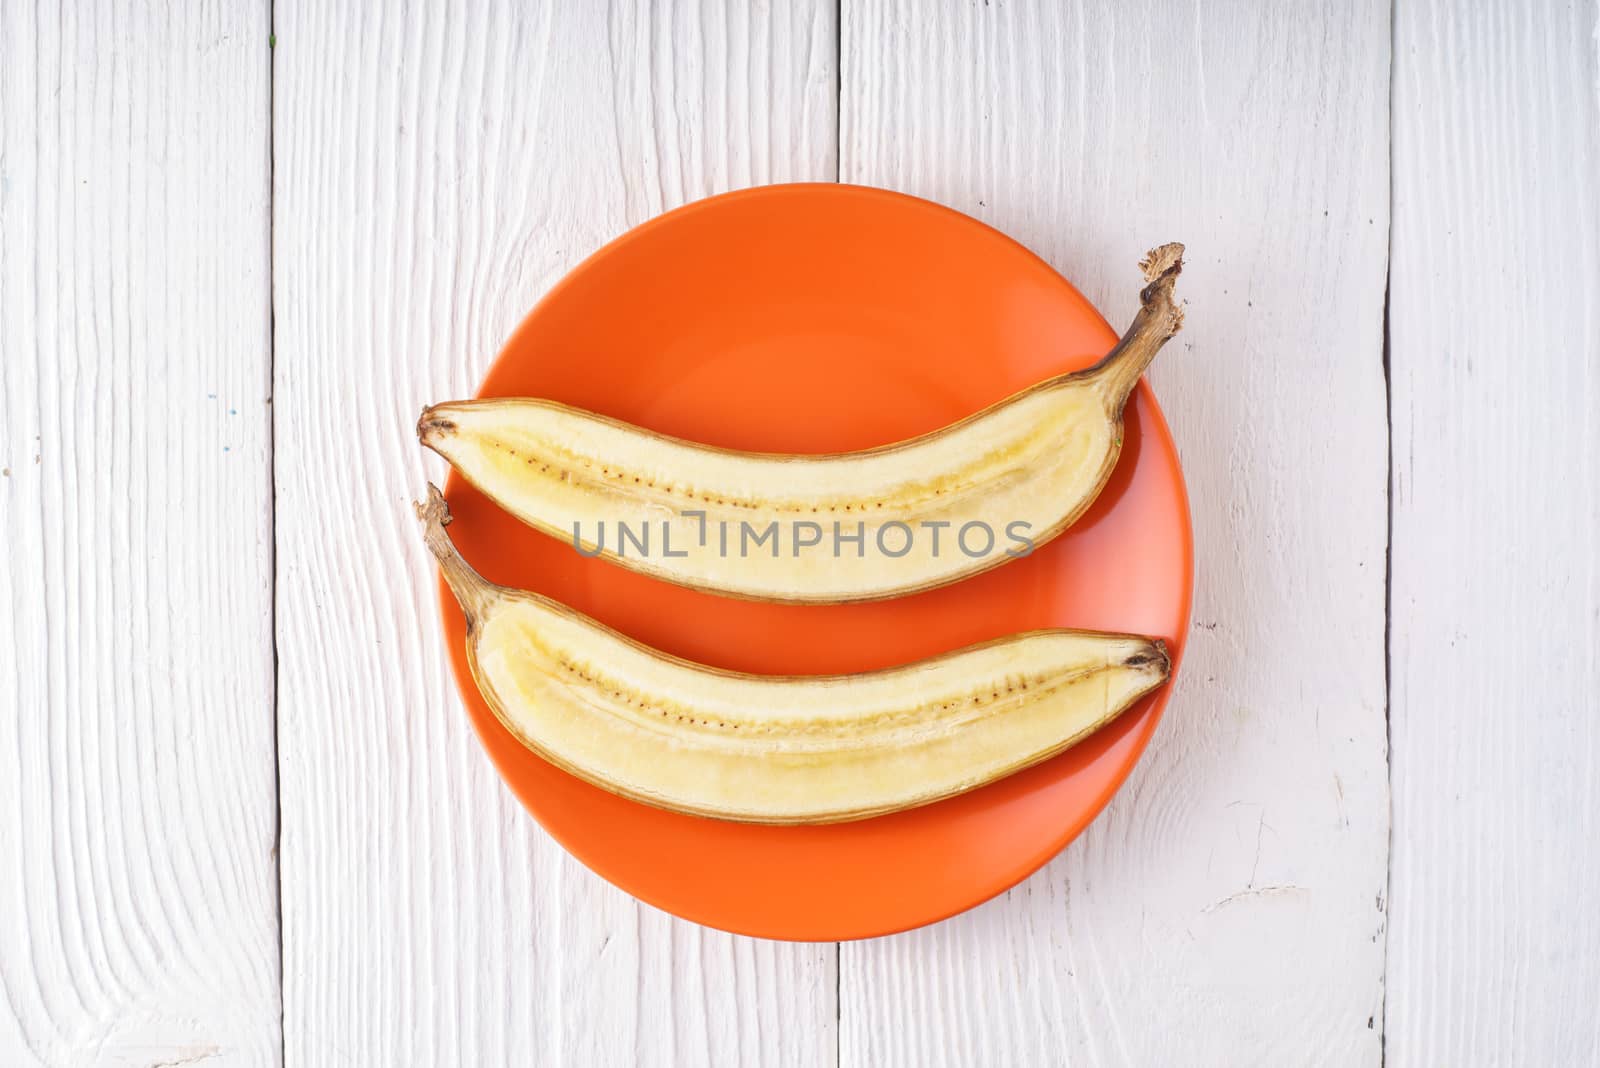 Banana halves lie on orange plate horizontal